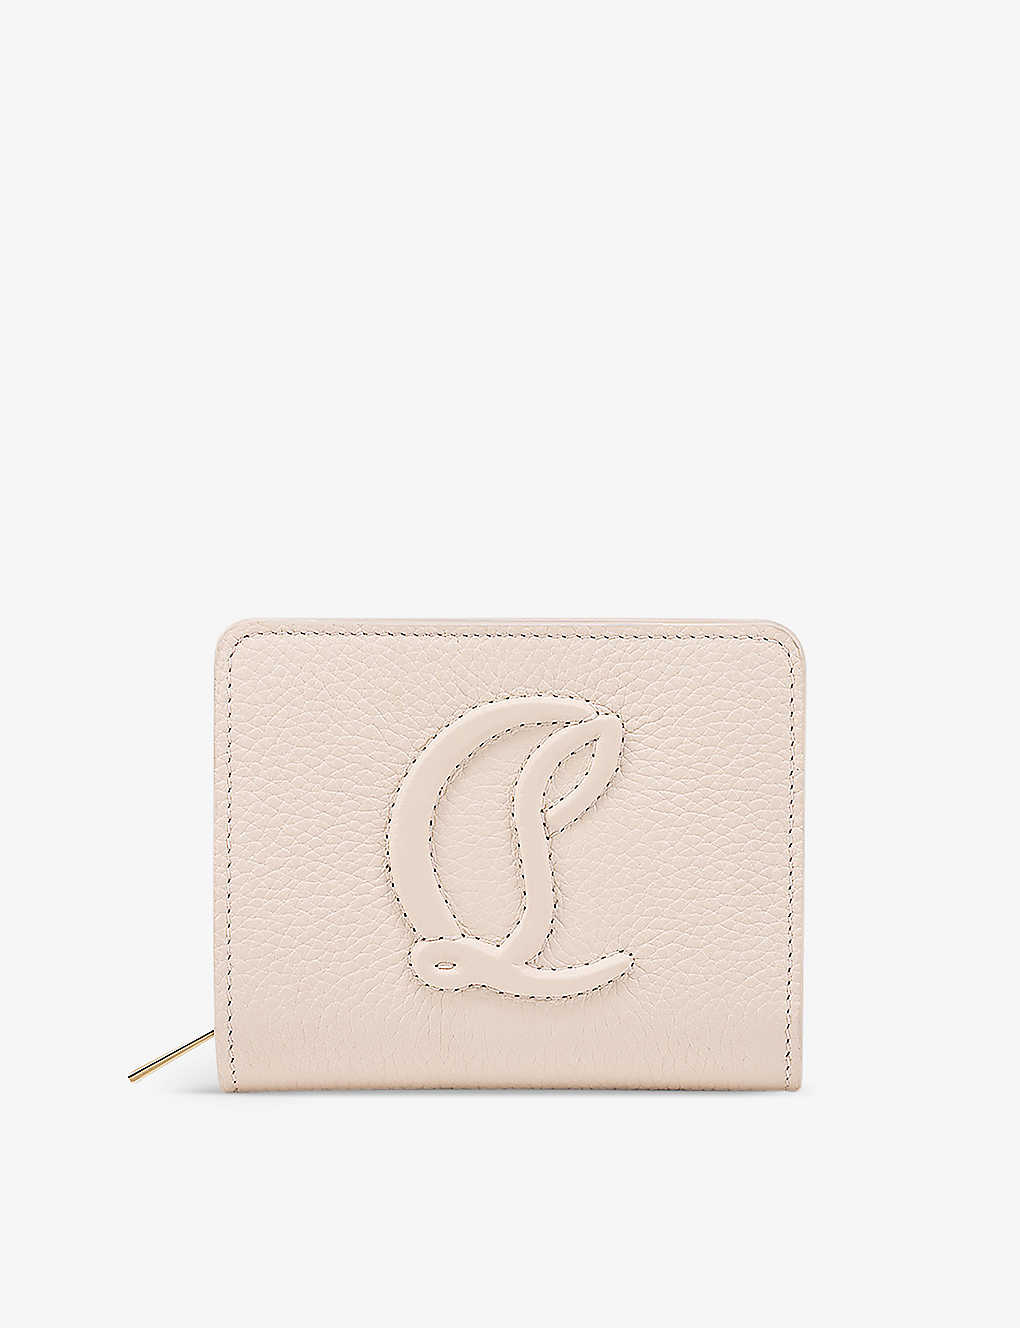 Shop Christian Louboutin Women's Leche By My Side Leather Wallet